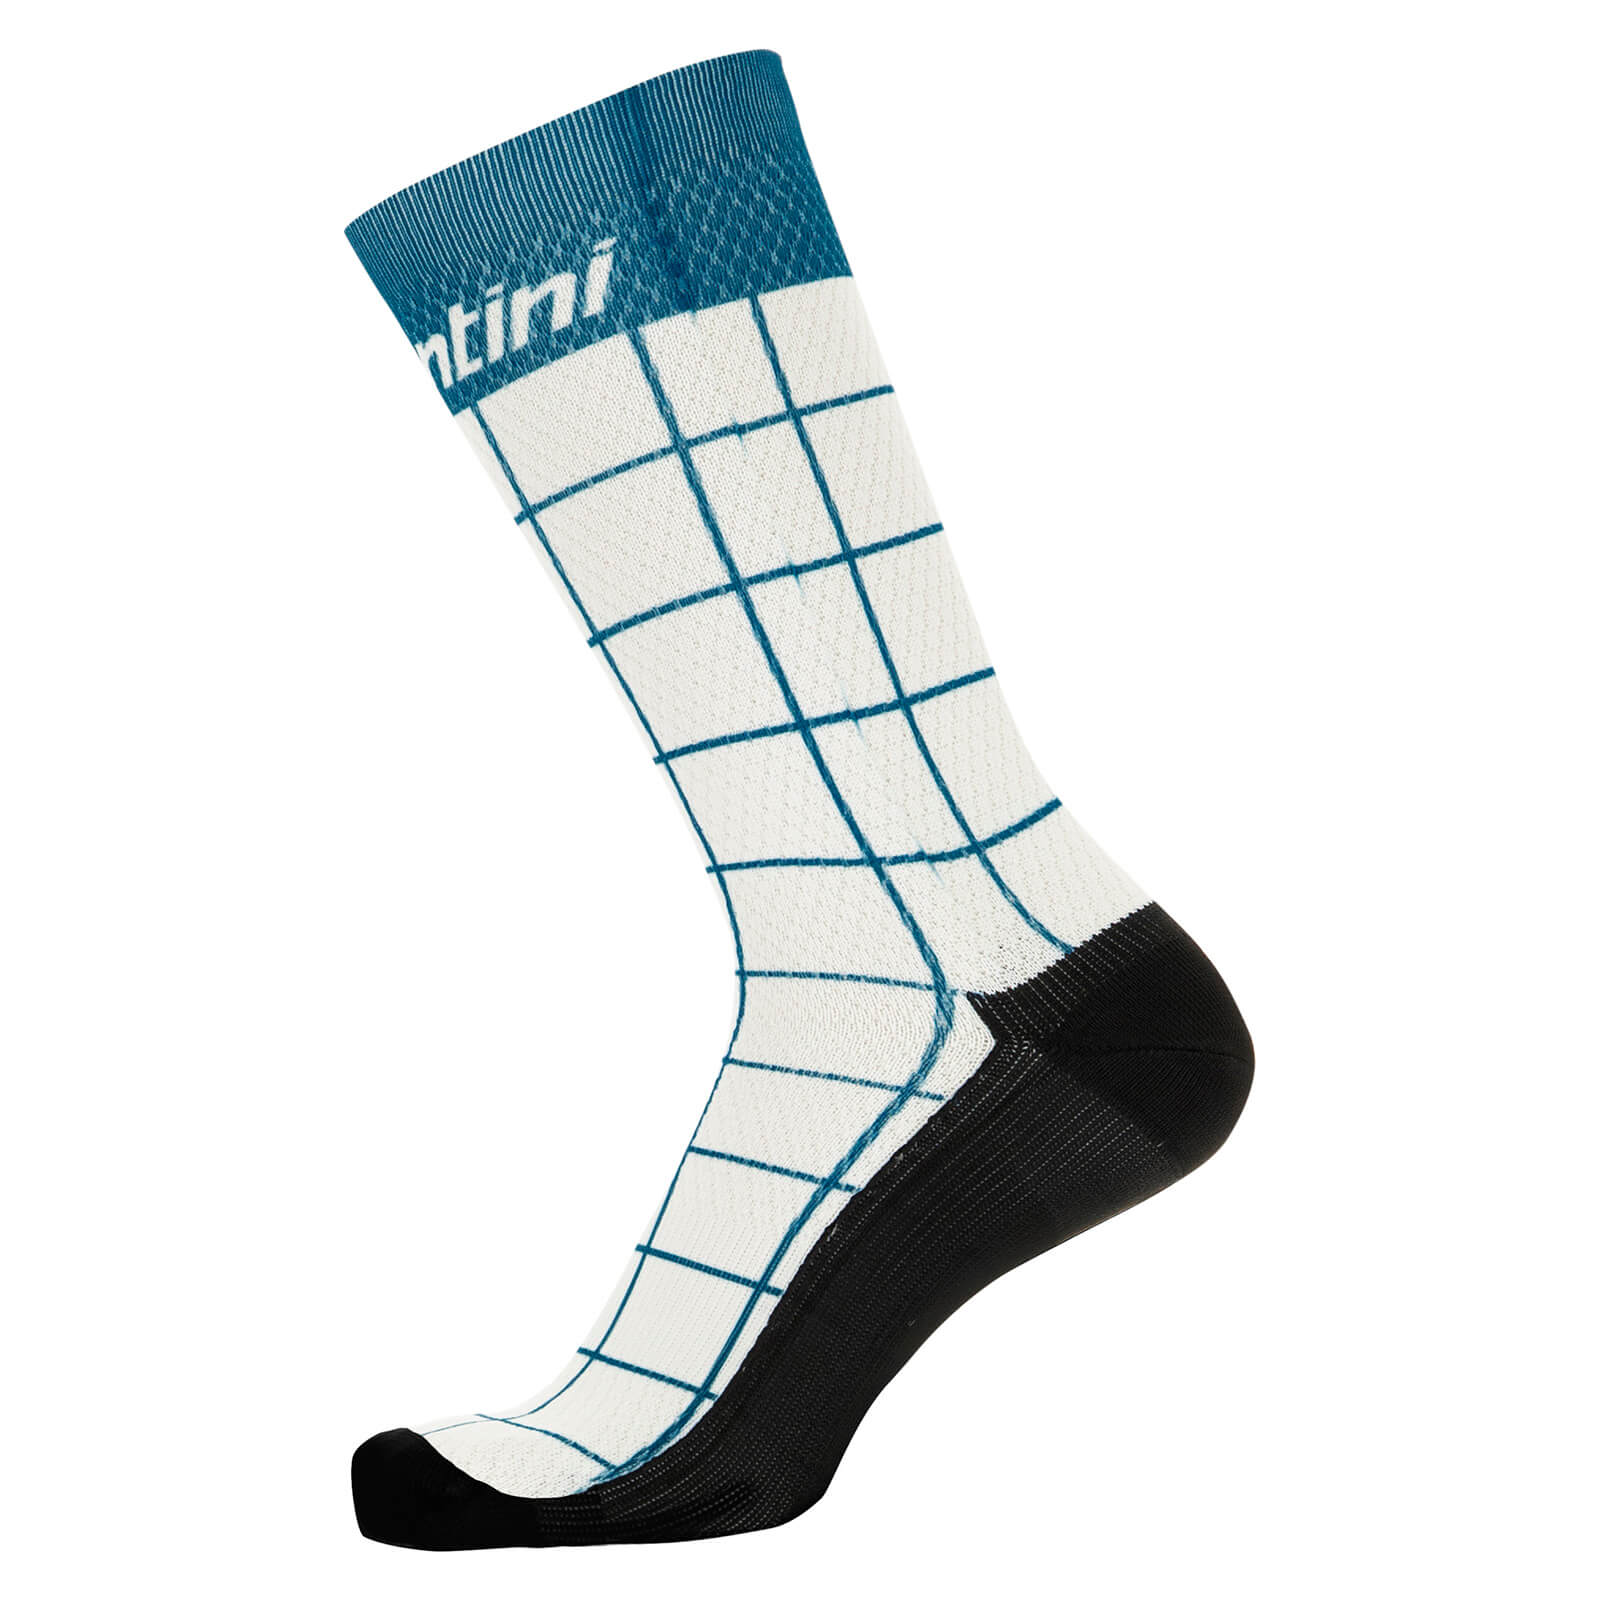 Santini Dinamo Medium Profile Printed Socks - XL - Silver Bullet